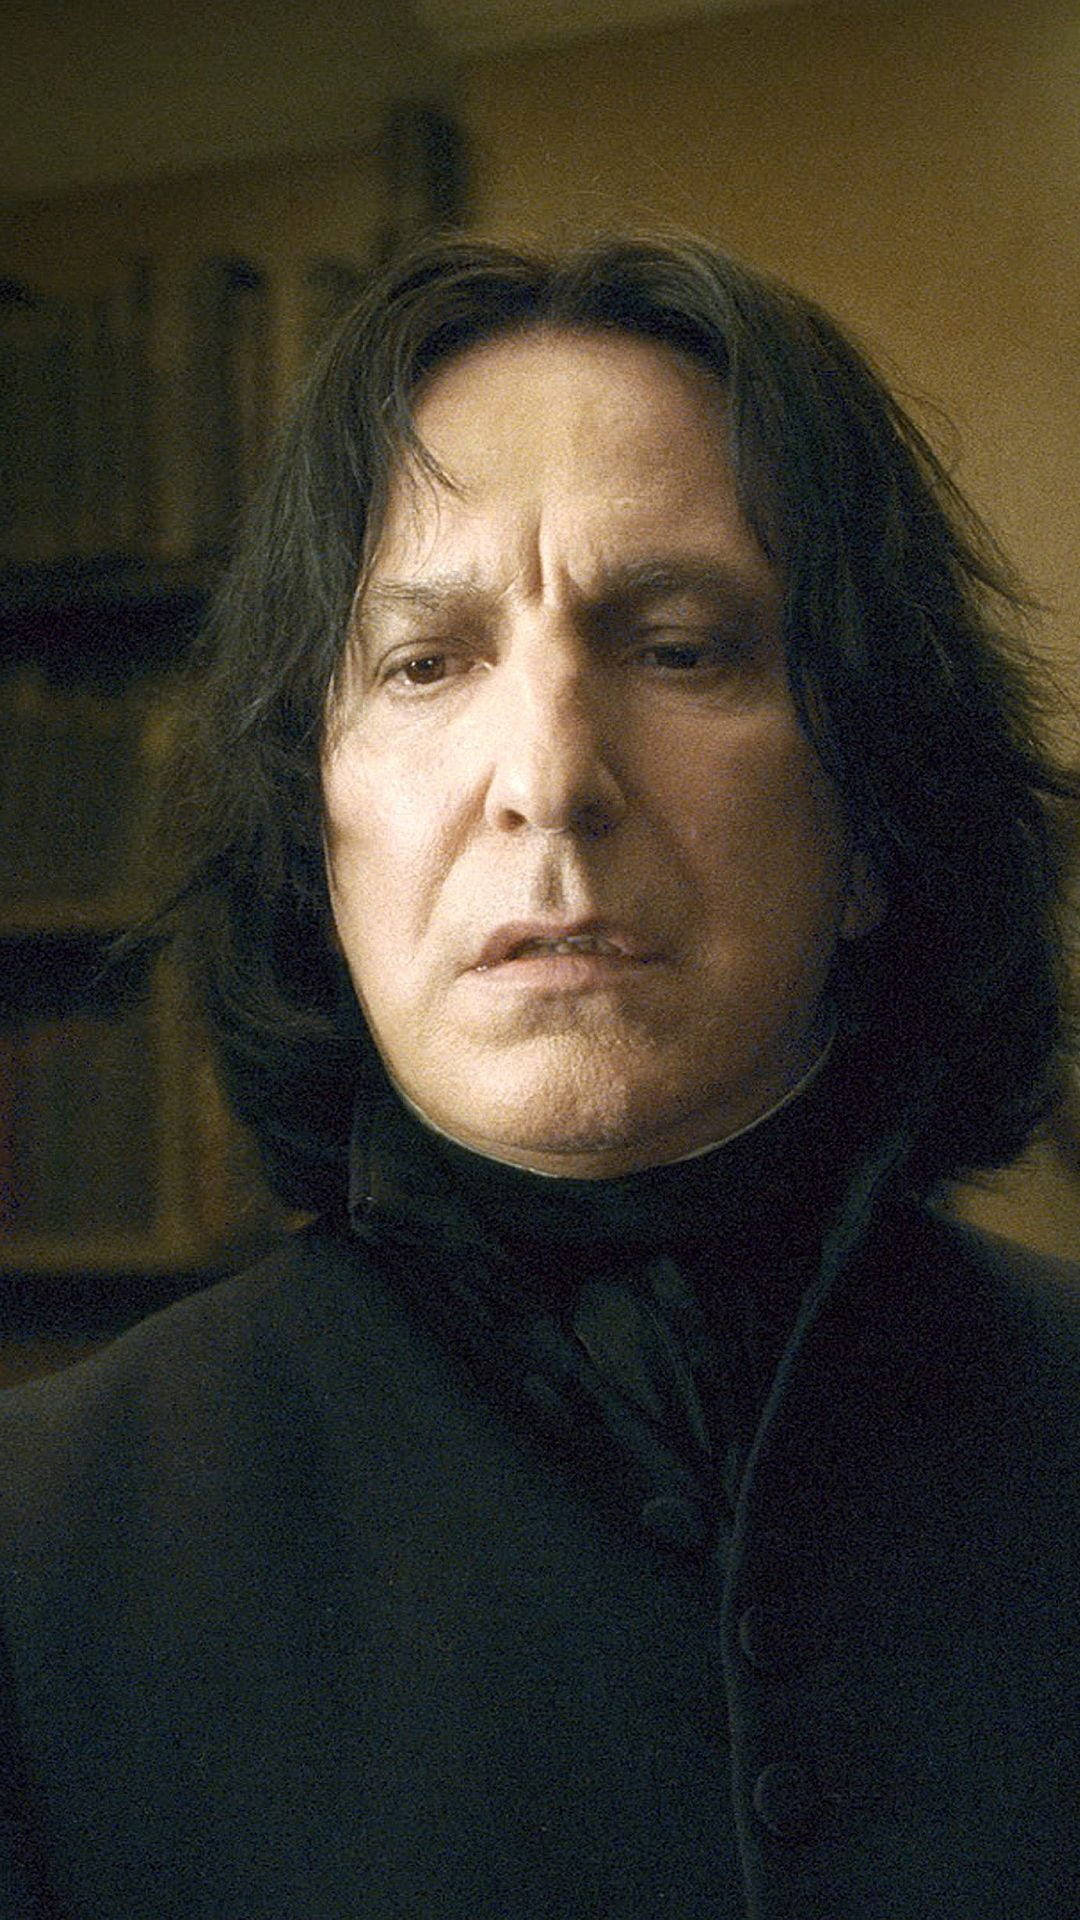 Severus Snape Distraught Wallpaper